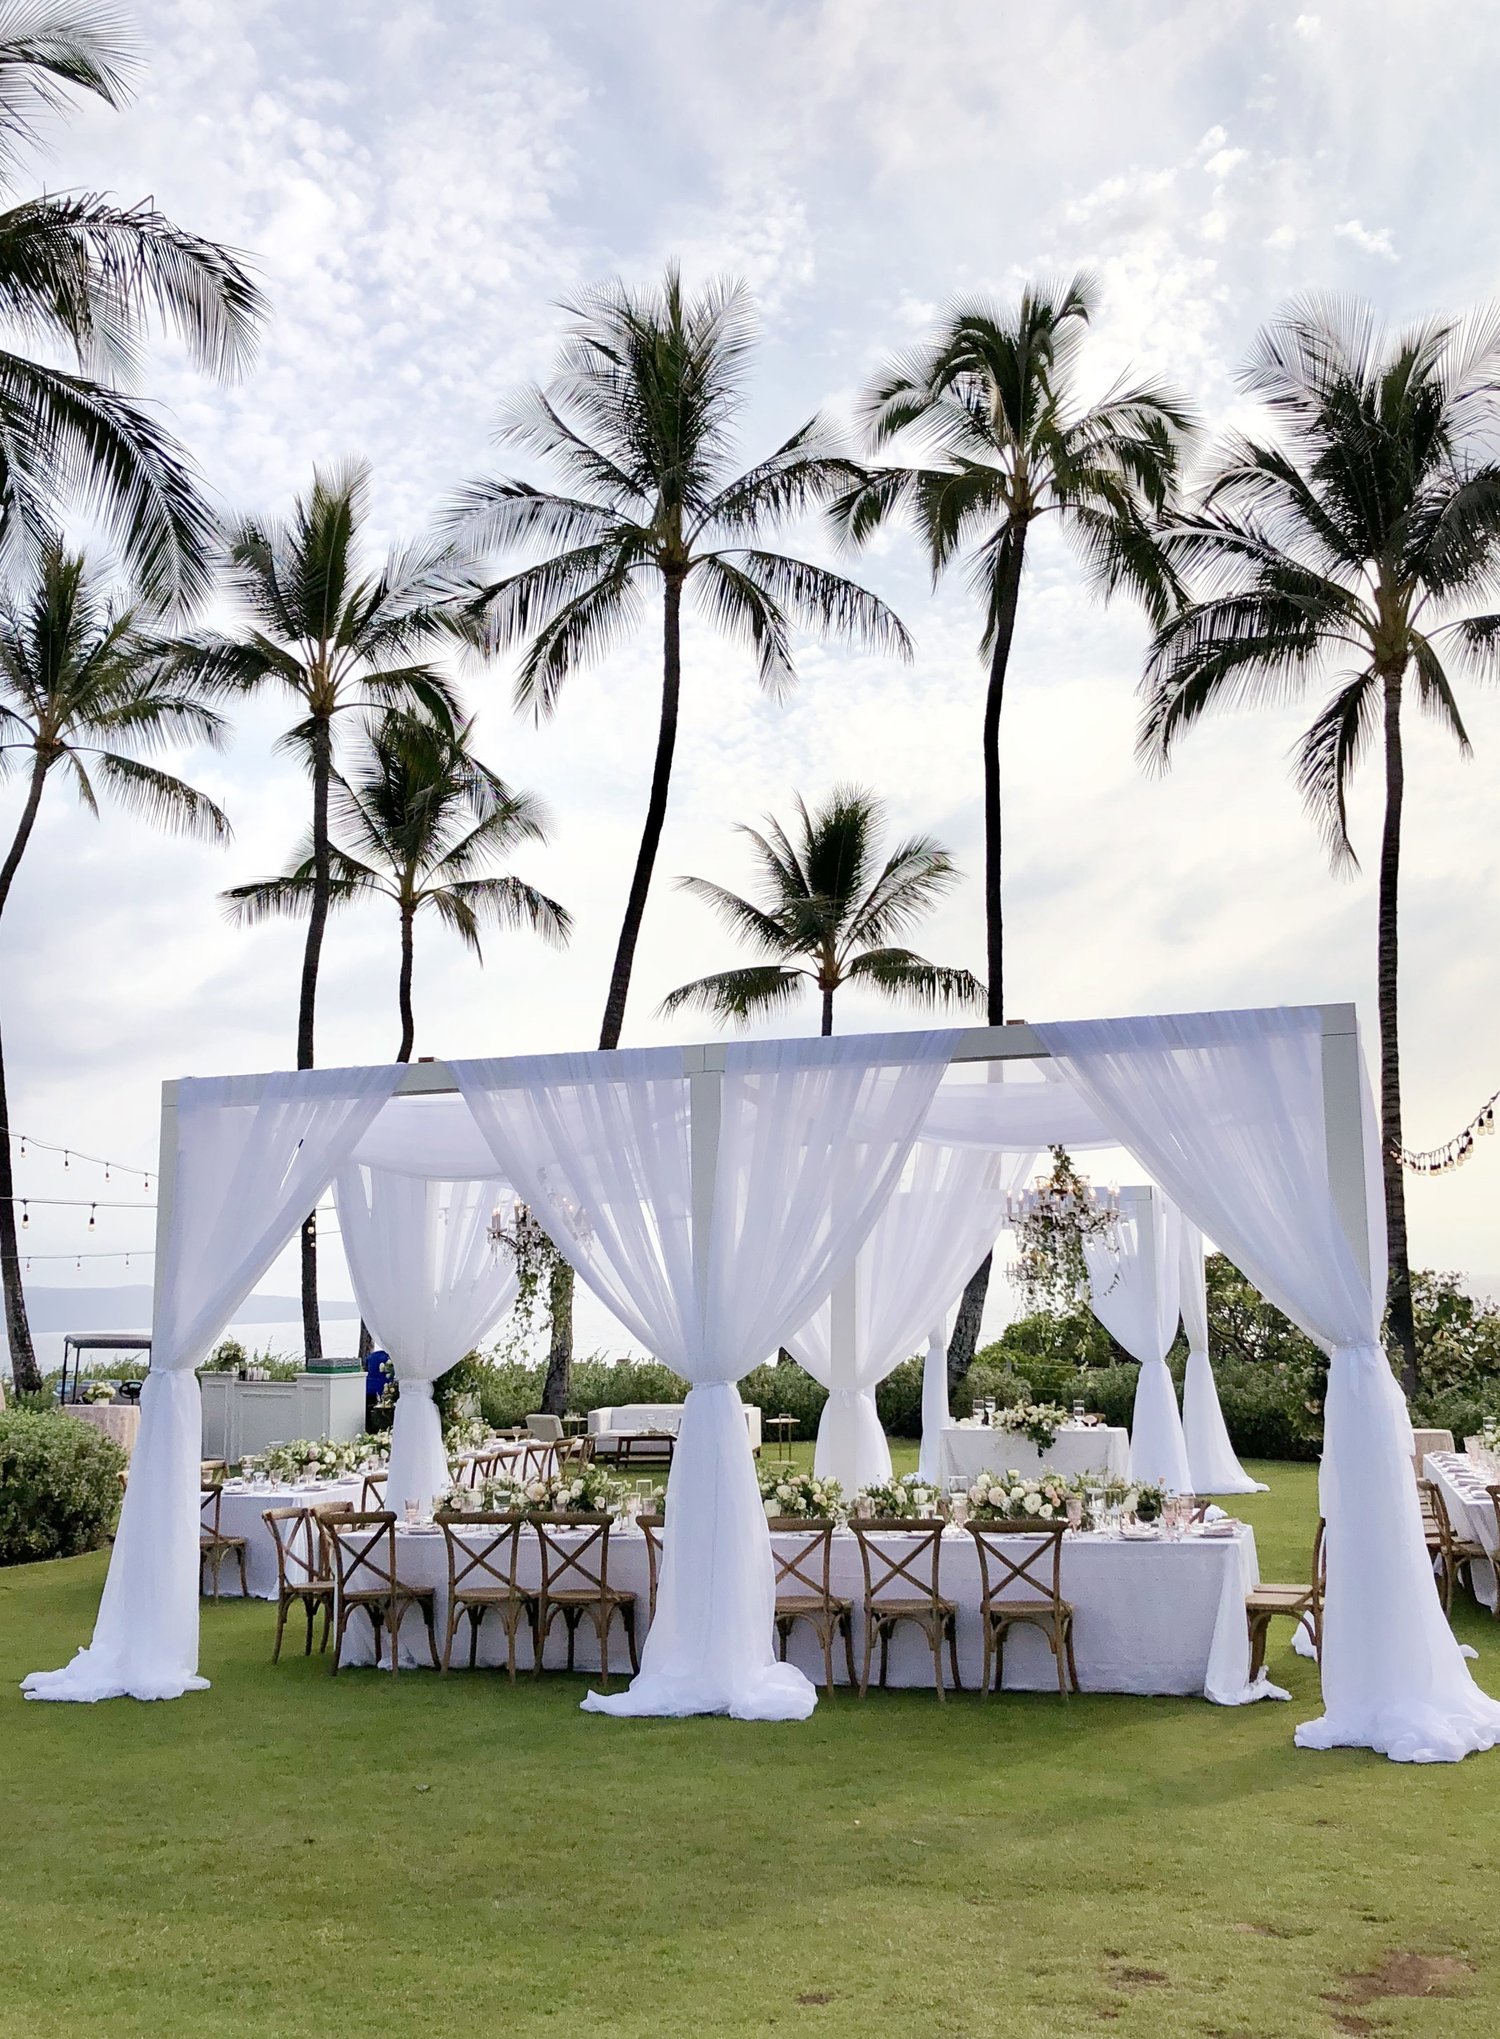 signature-maui-equipment-rentals-decor-for-weddings-in-maui-hawaii 3.jpg